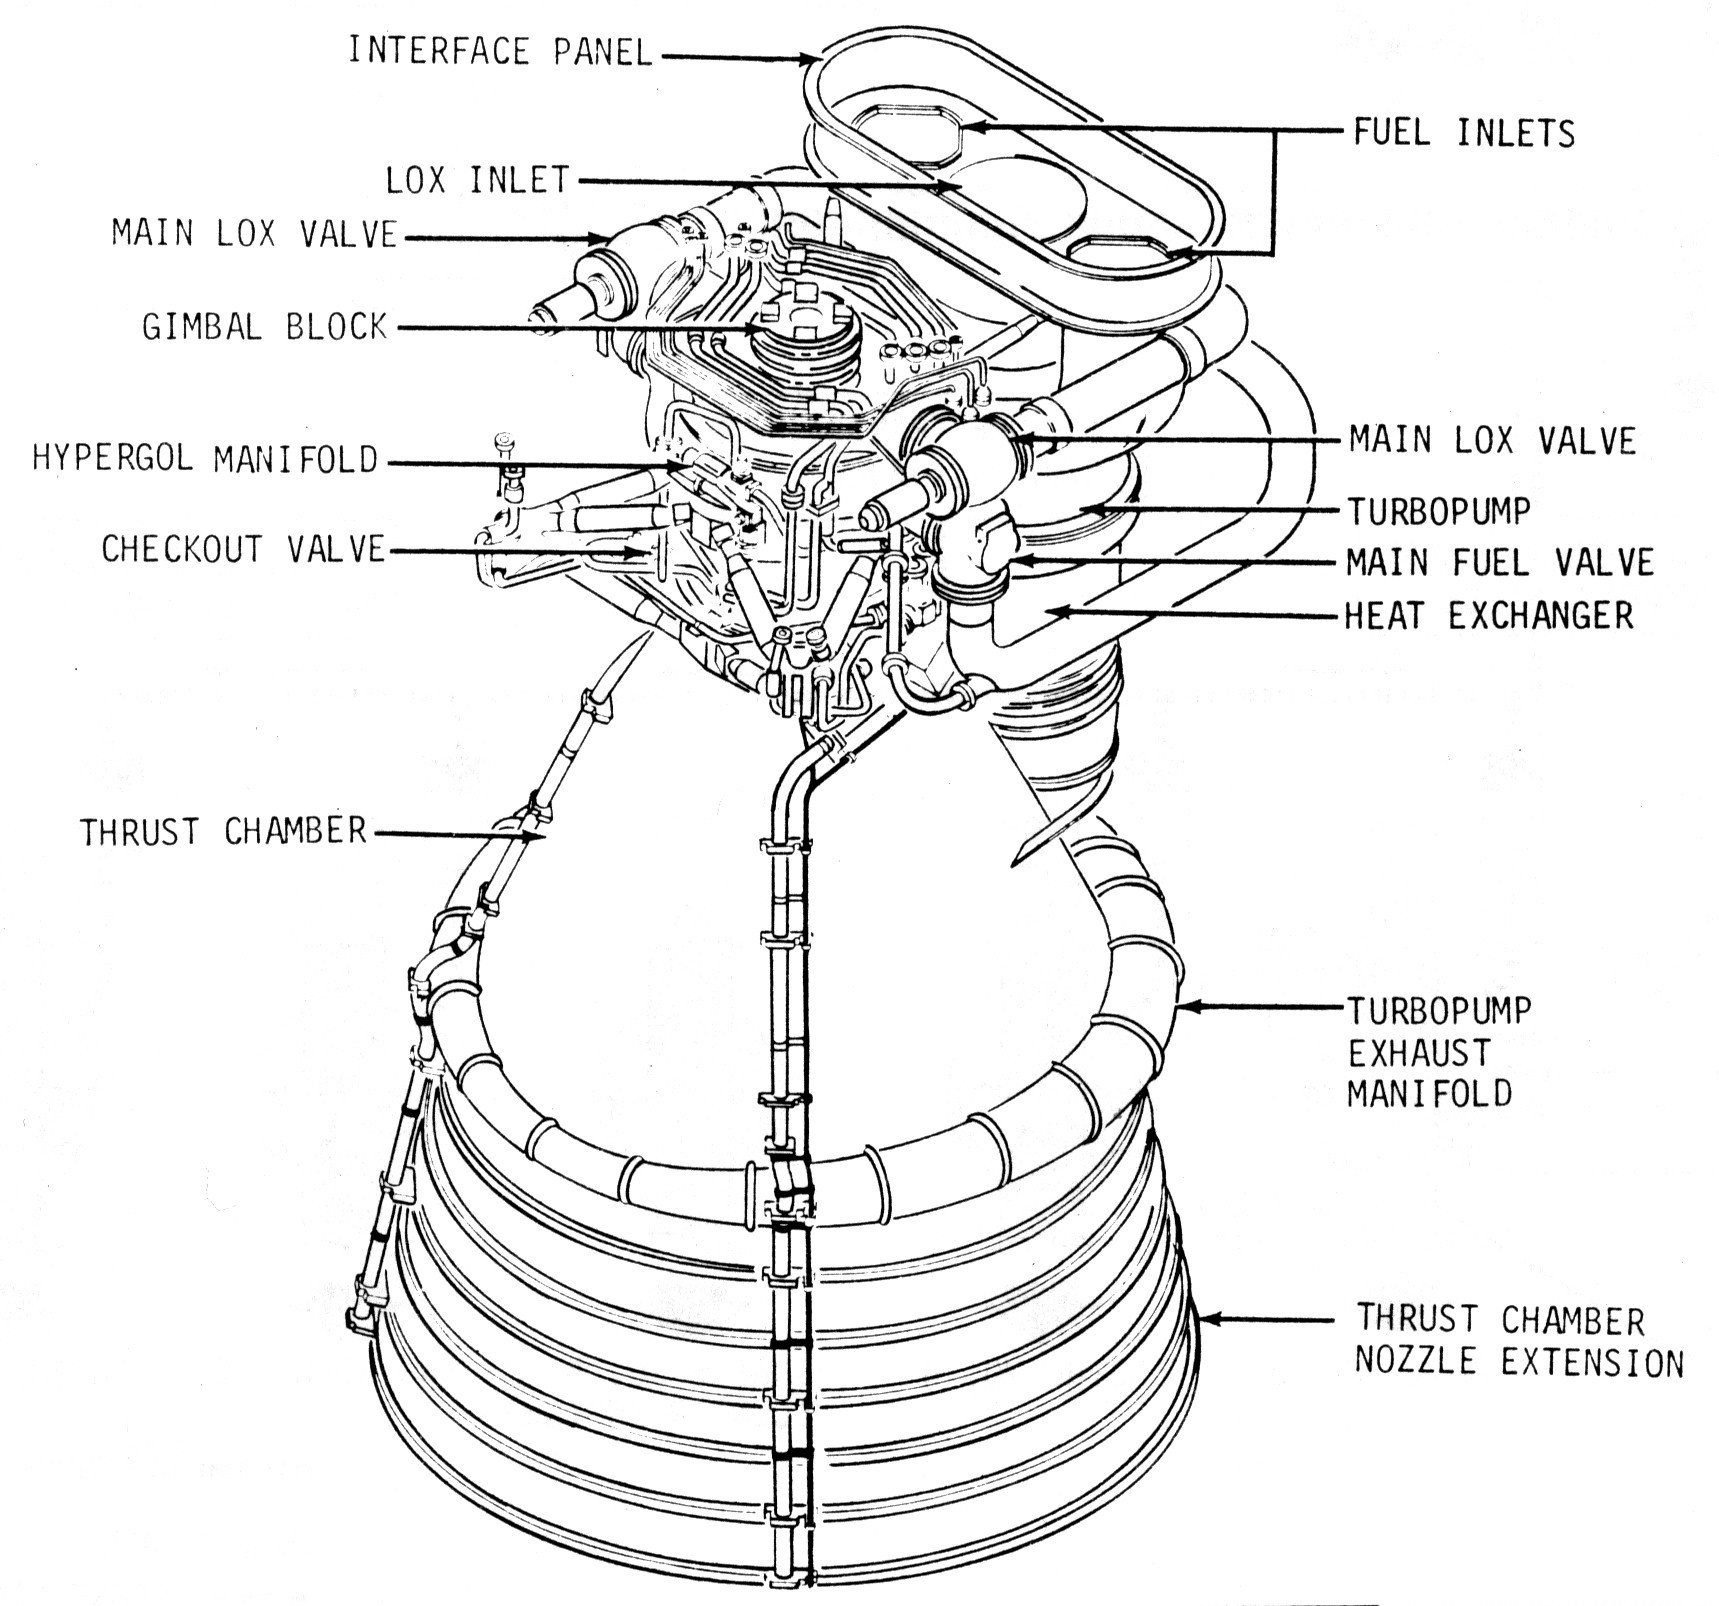 Diagram Of Saturn Engine Saturn V F 1 Engine Diagram